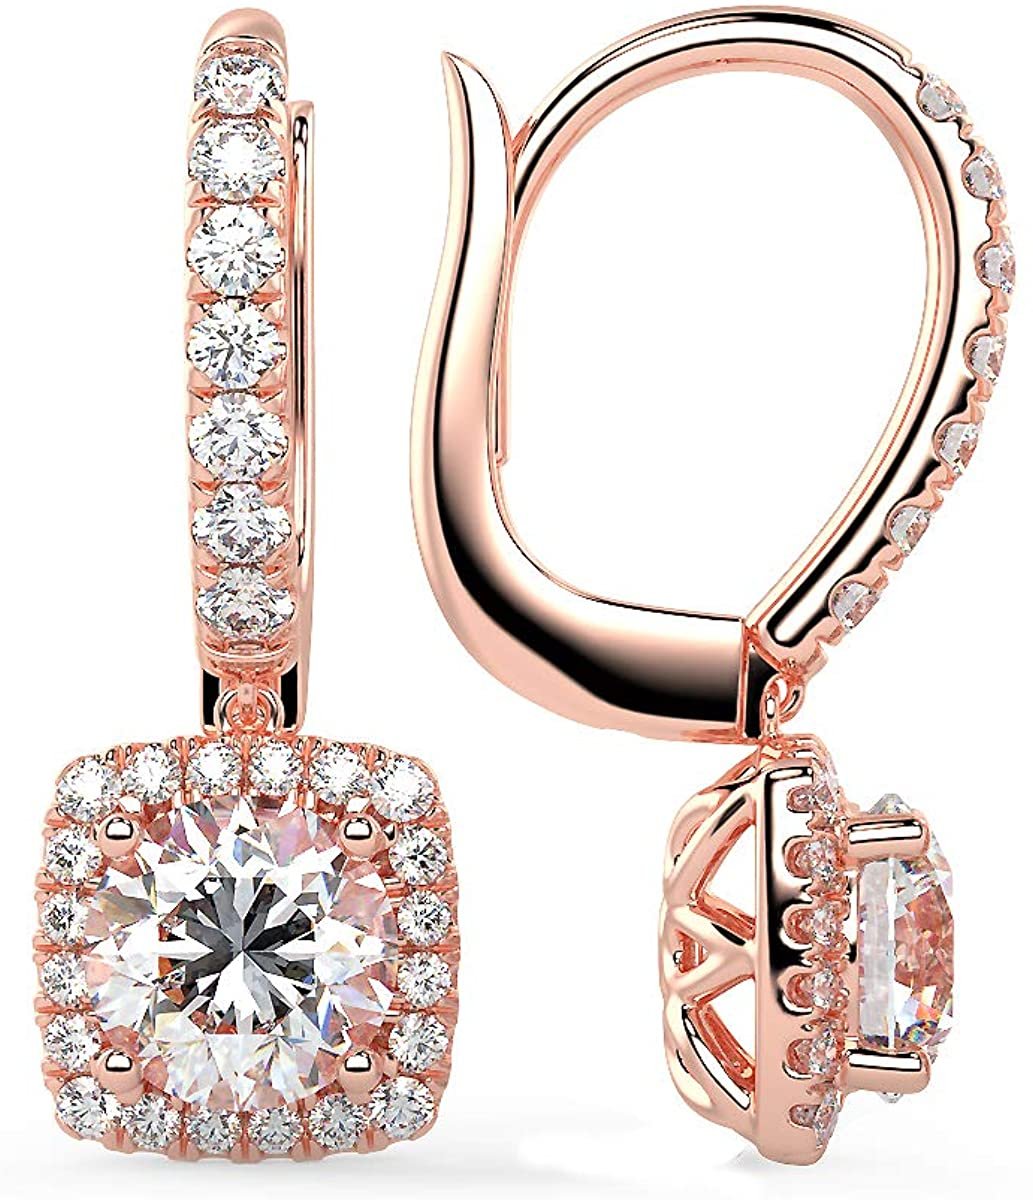 1/4 Carat Diamond Lever-back Drop Earrings in 14K Rose Gold (SI1-SI2 Clarit 